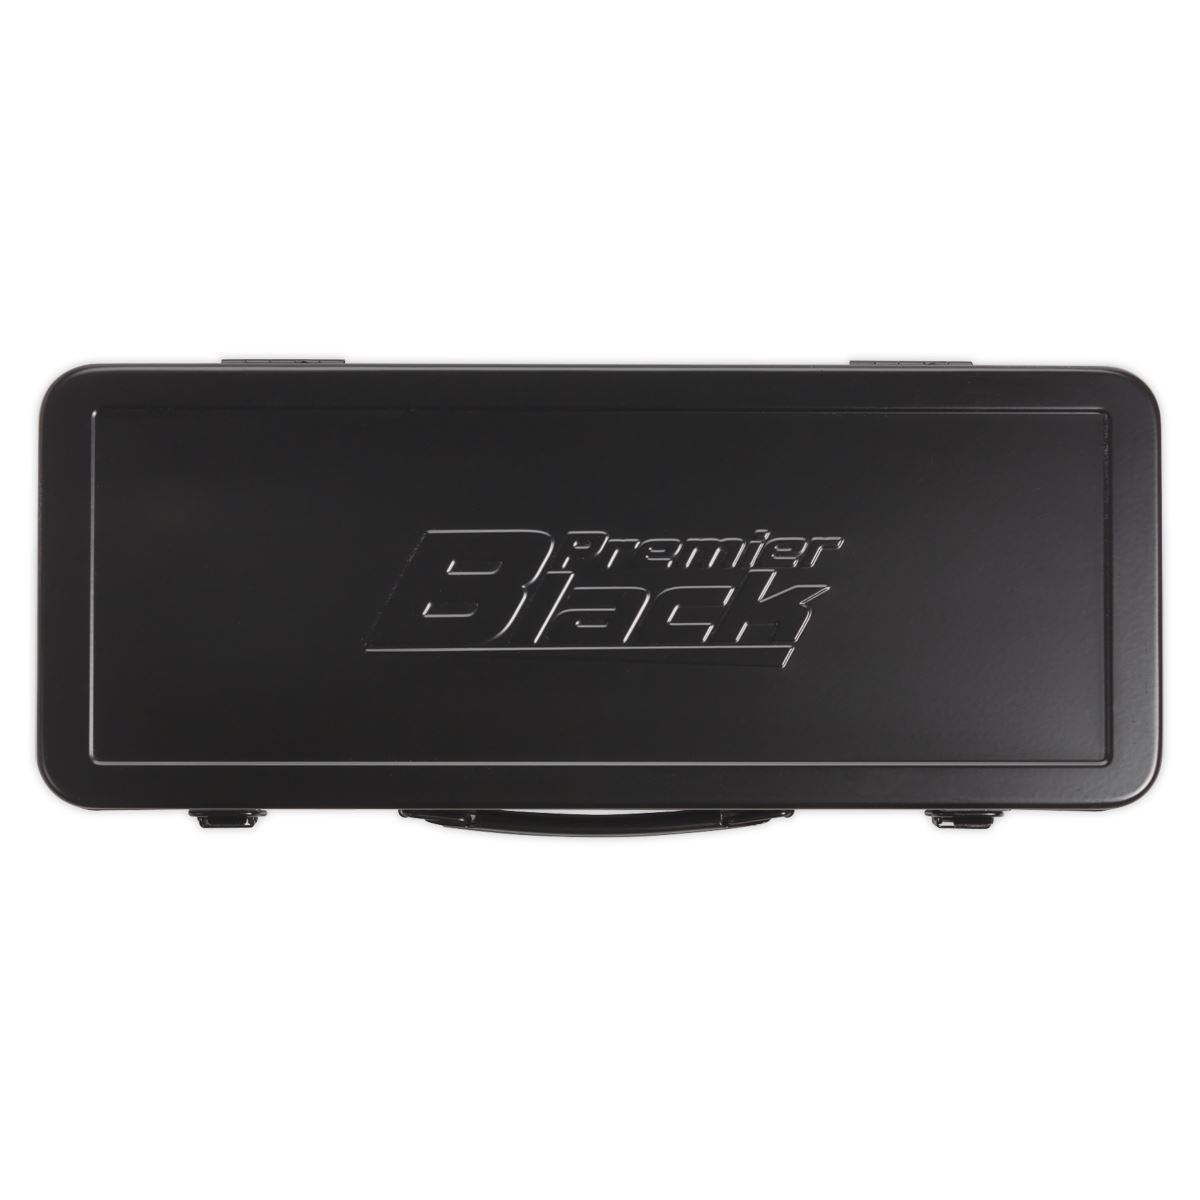 Sealey Premier Black 32 Piece 1/4" Drive Metric Socket Set WallDrive Ratchet Handle